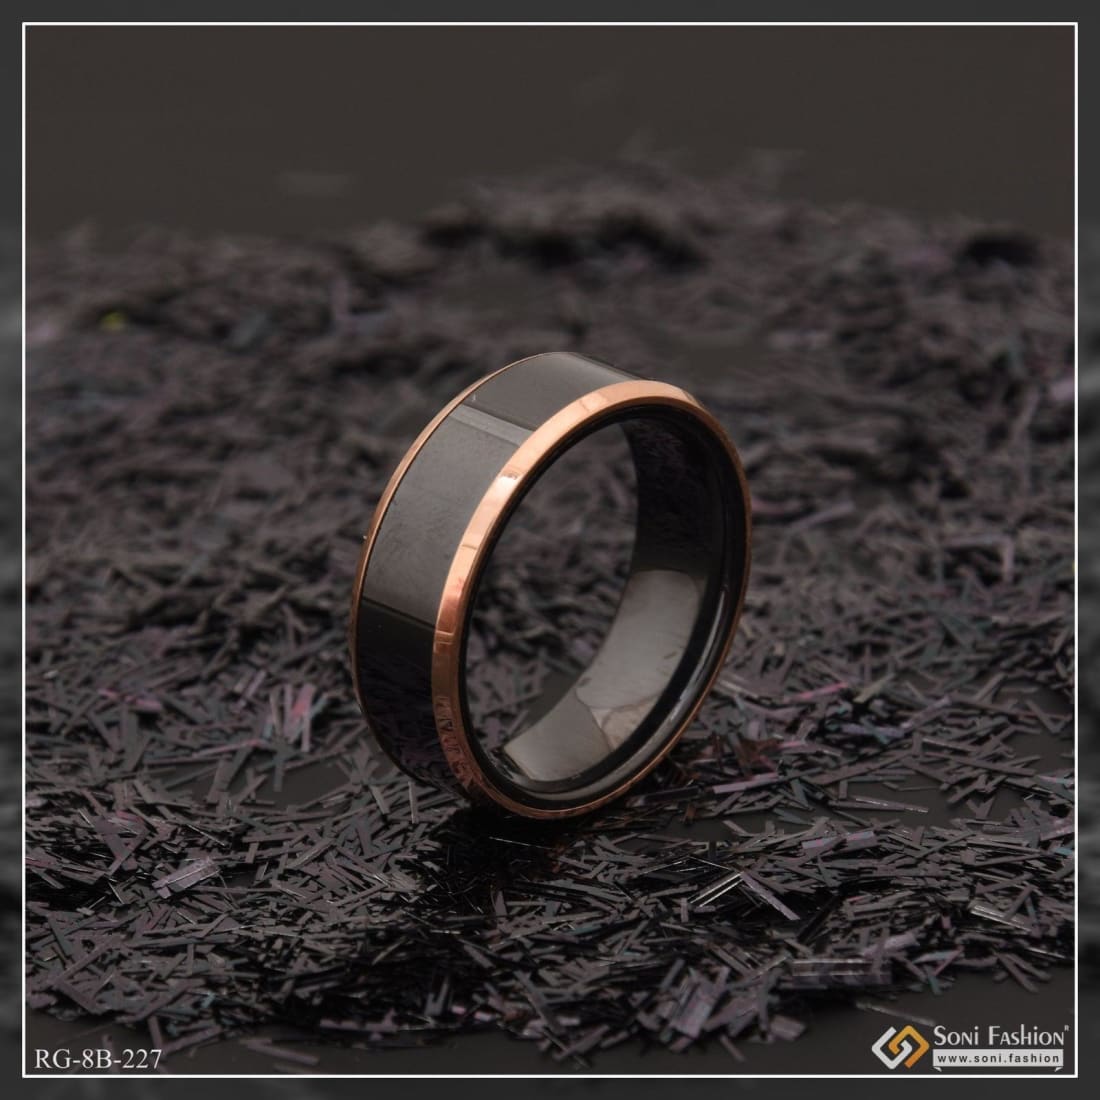 Buy Black Rings for Men by Vendsy Online | Ajio.com